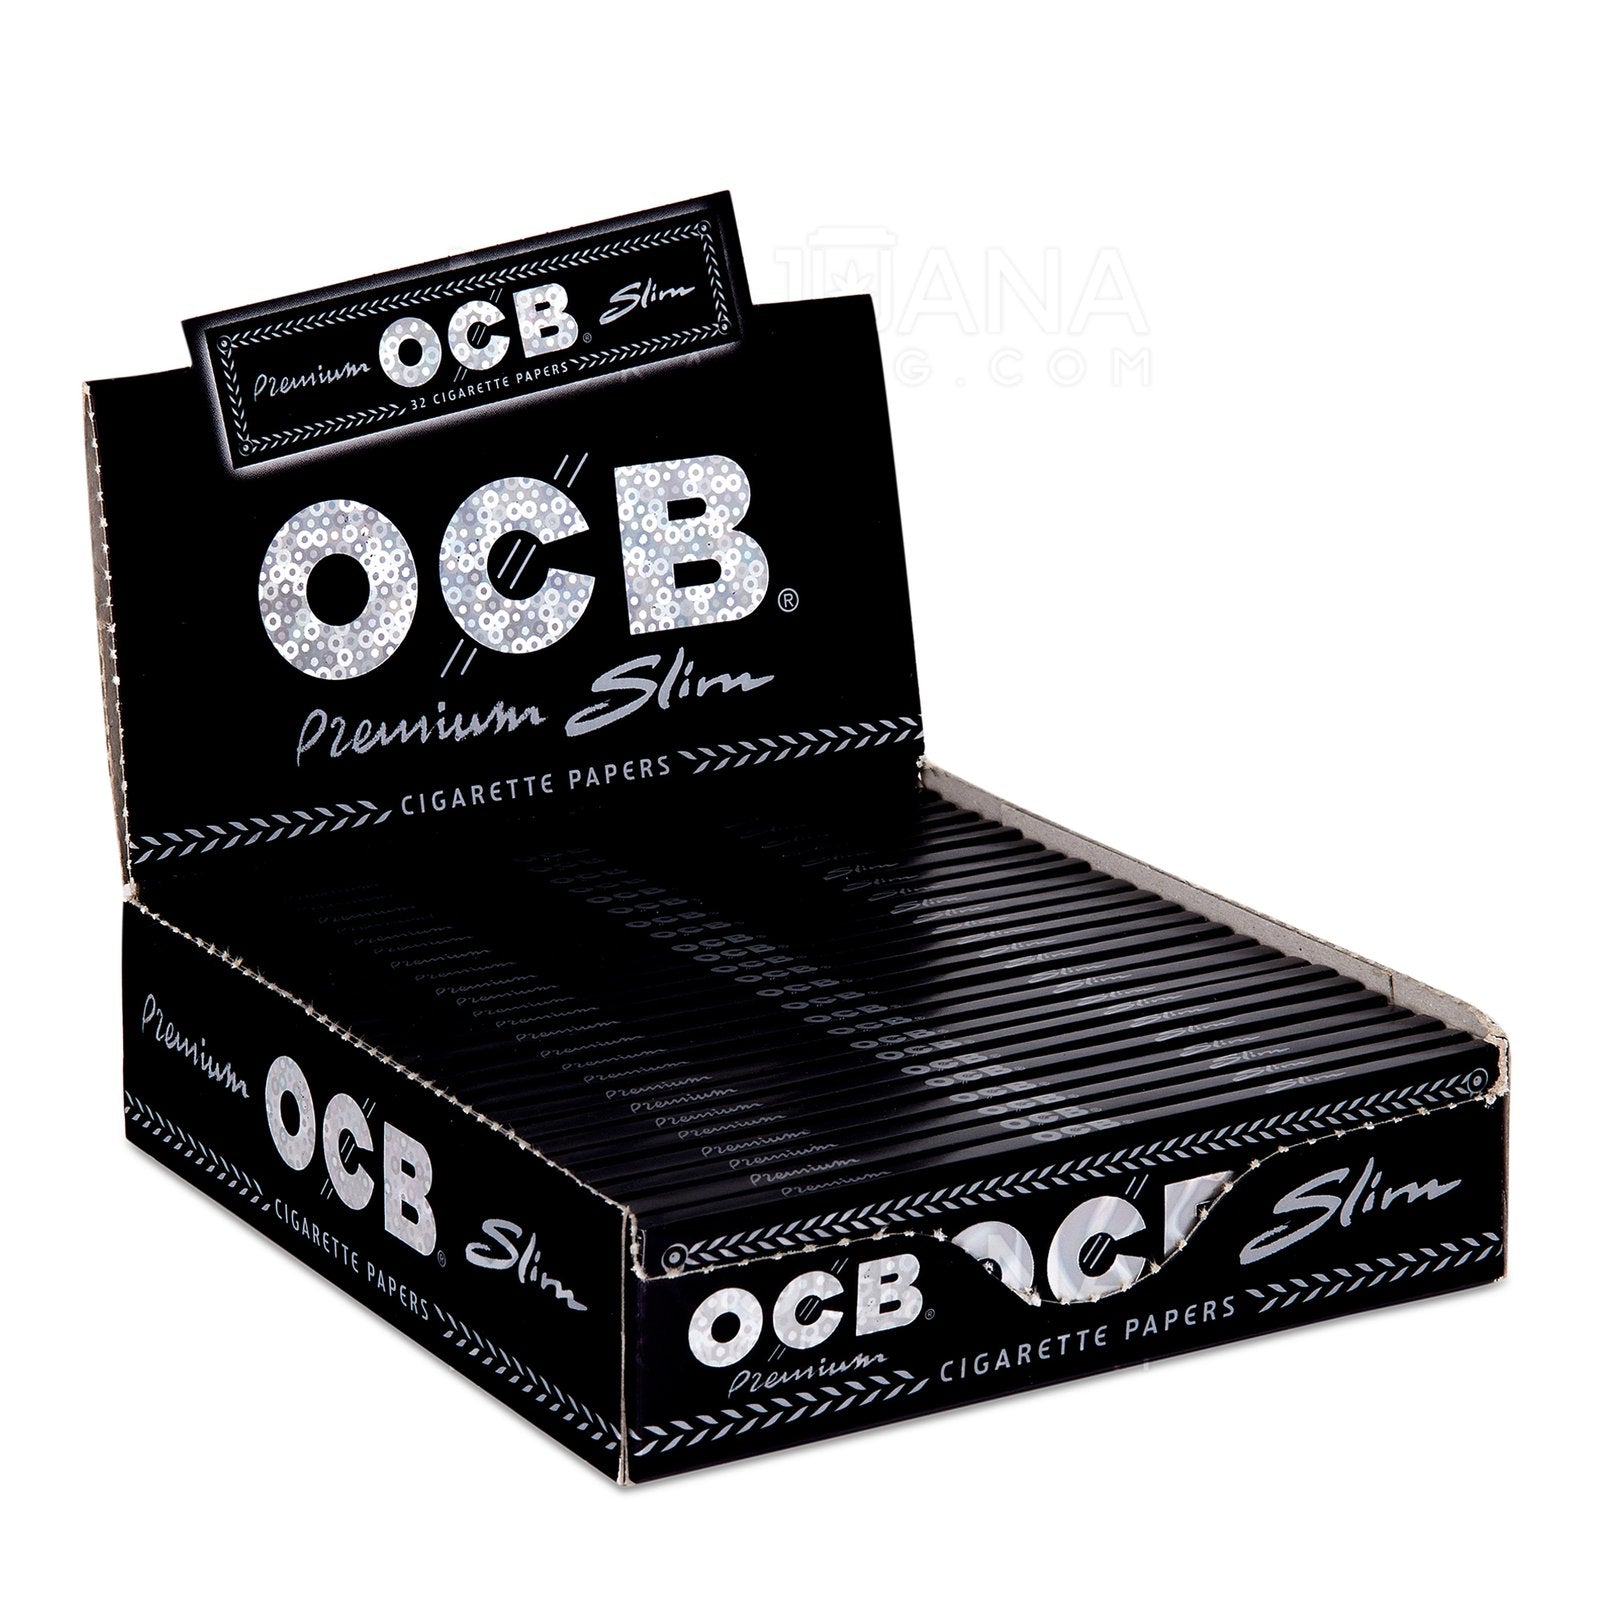 Ocb premium cigarette rolling paper small 50 pcs